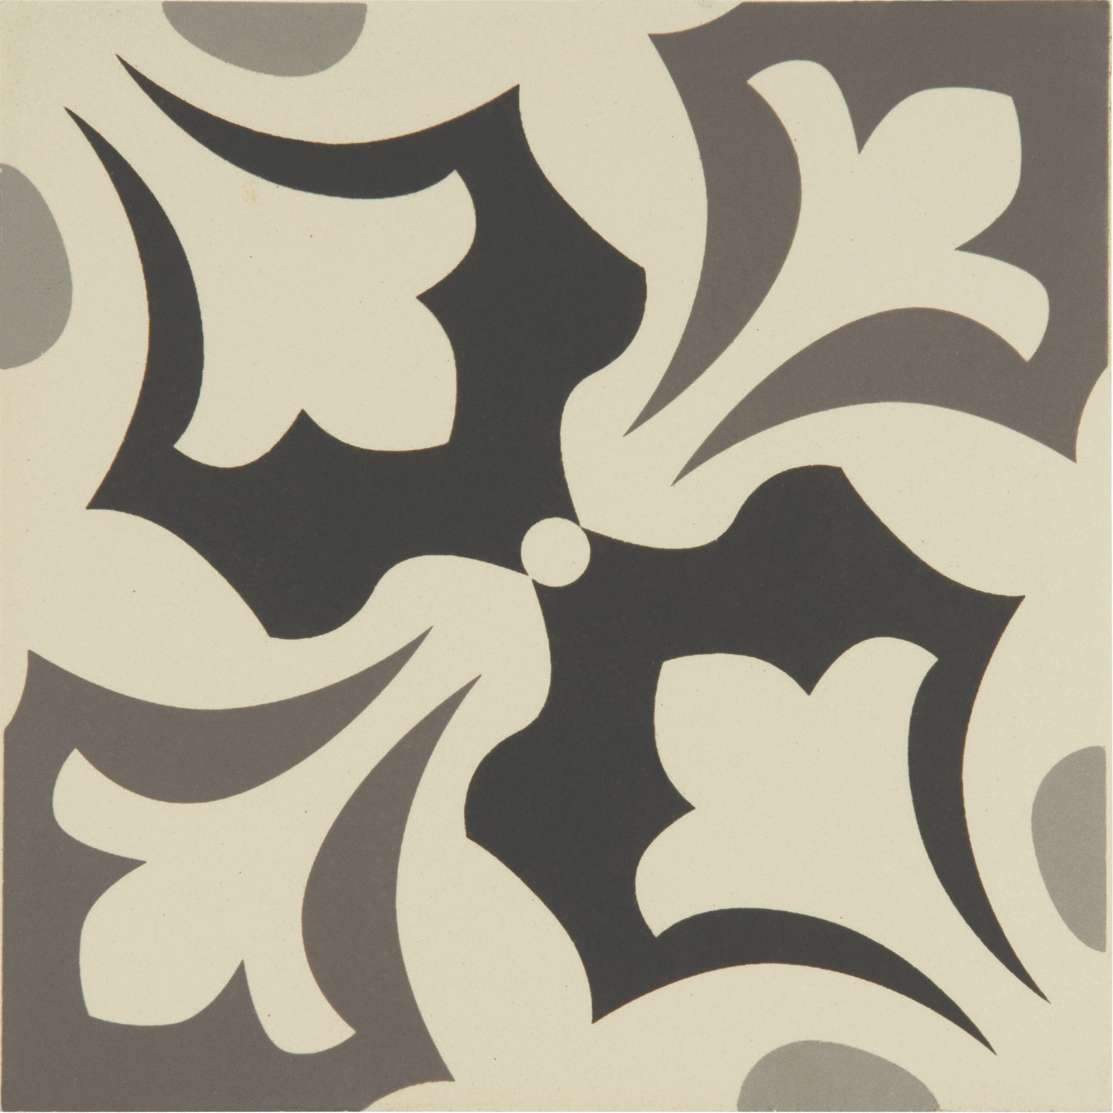 Original Style Odyssey Primo Rococo Light Grey, Dark Grey and Black on White Tile 15x15cm